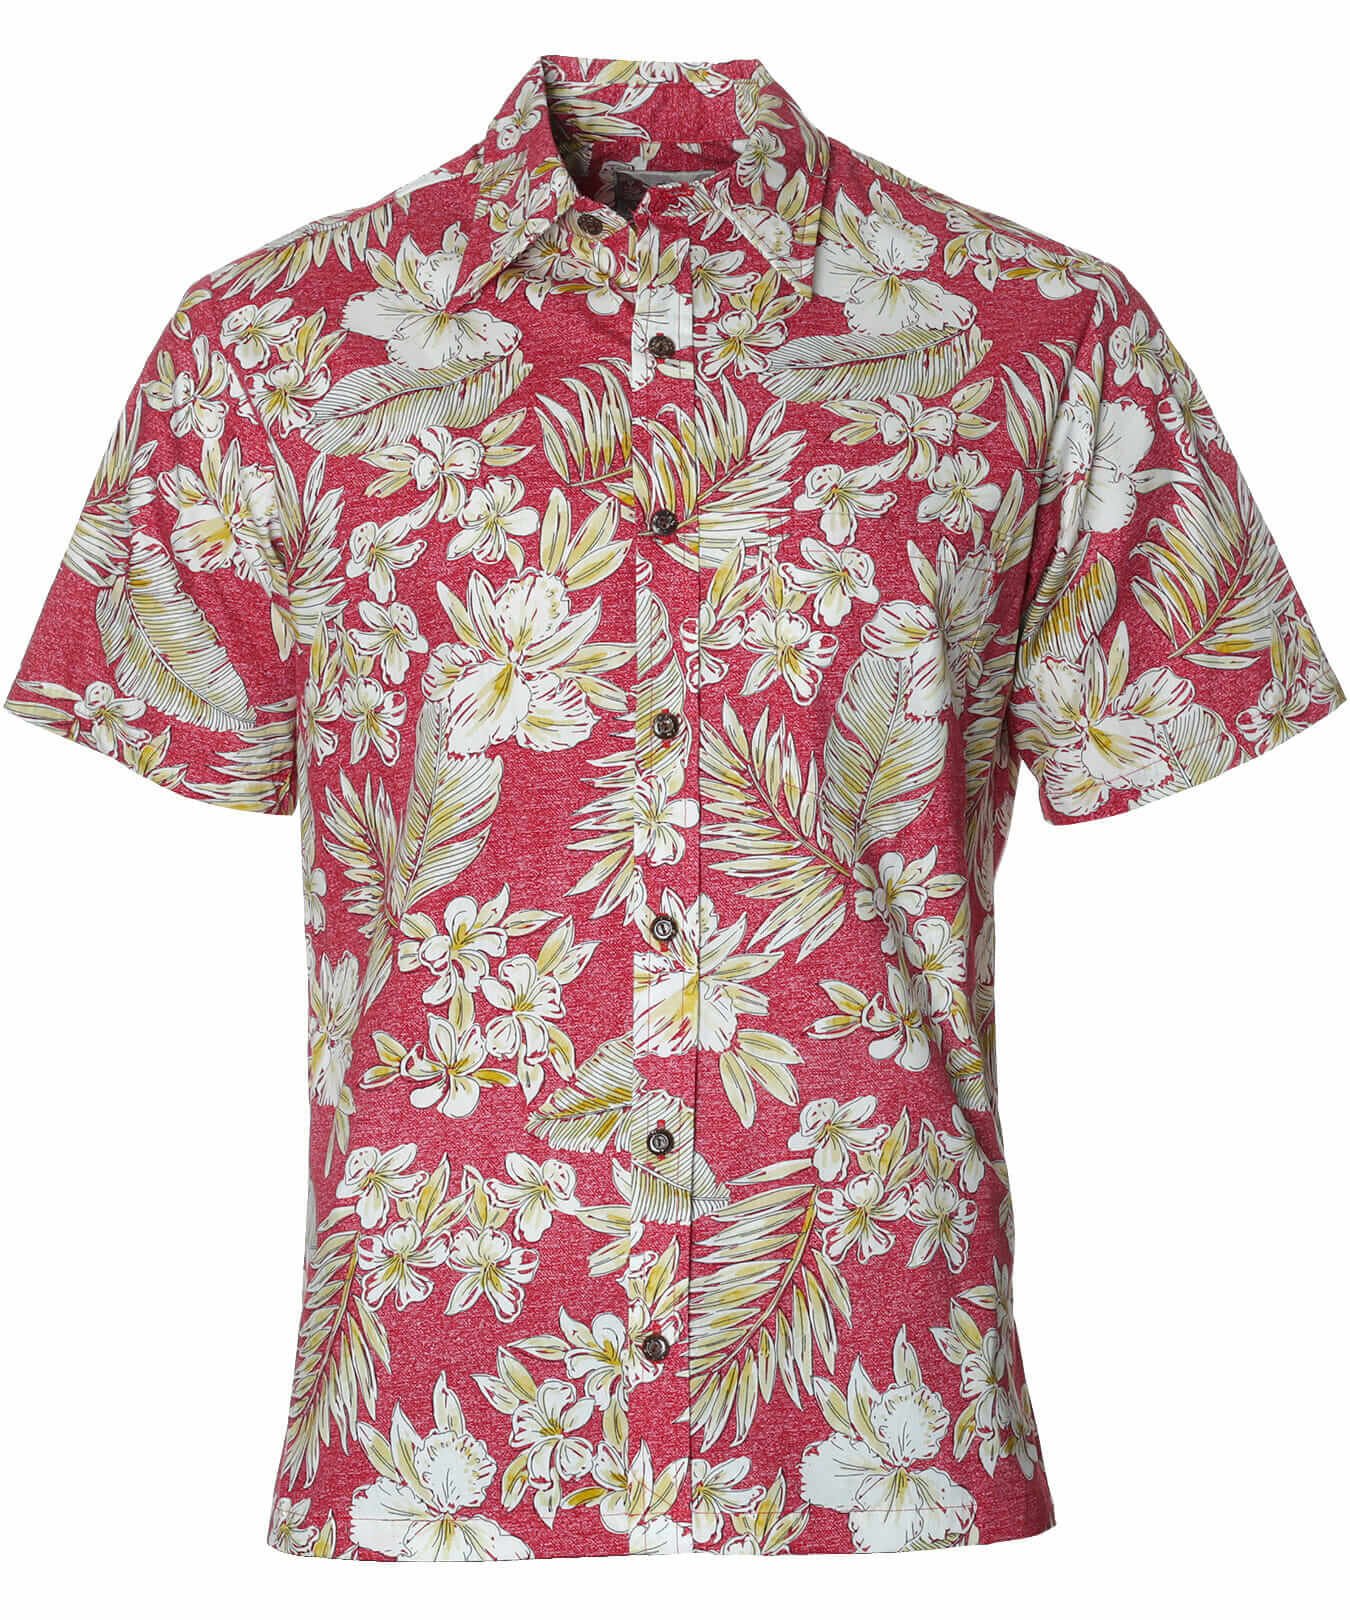 Island Vives Men's Aloha Shirt Red